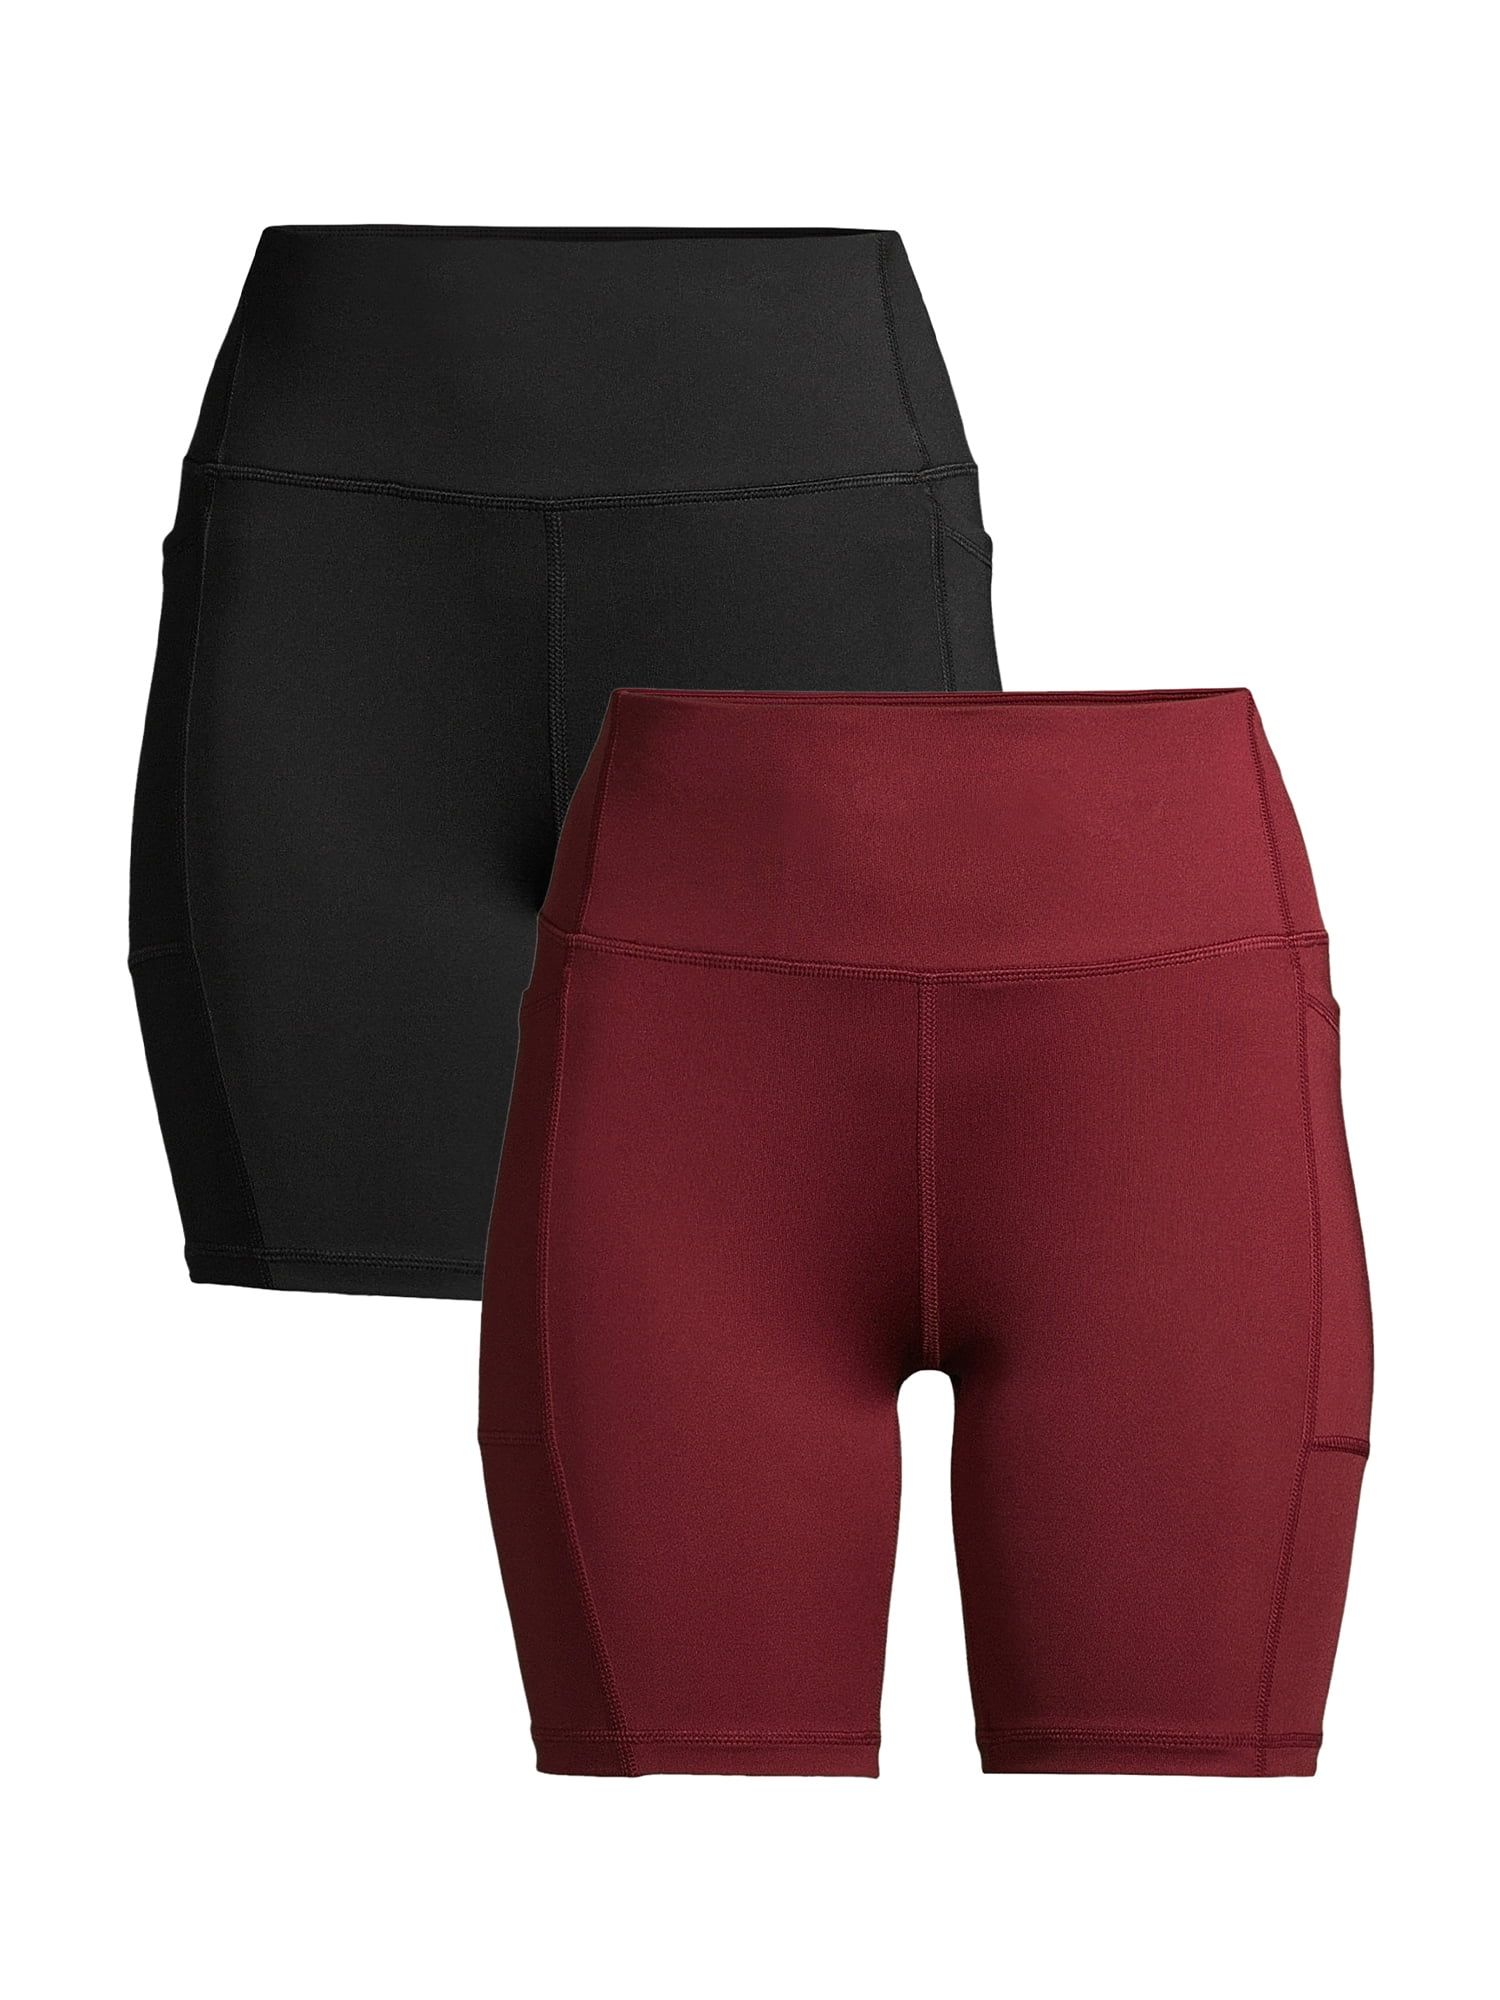 Athletic Works Women’s Bike Shorts, 2-Pack | Walmart (US)